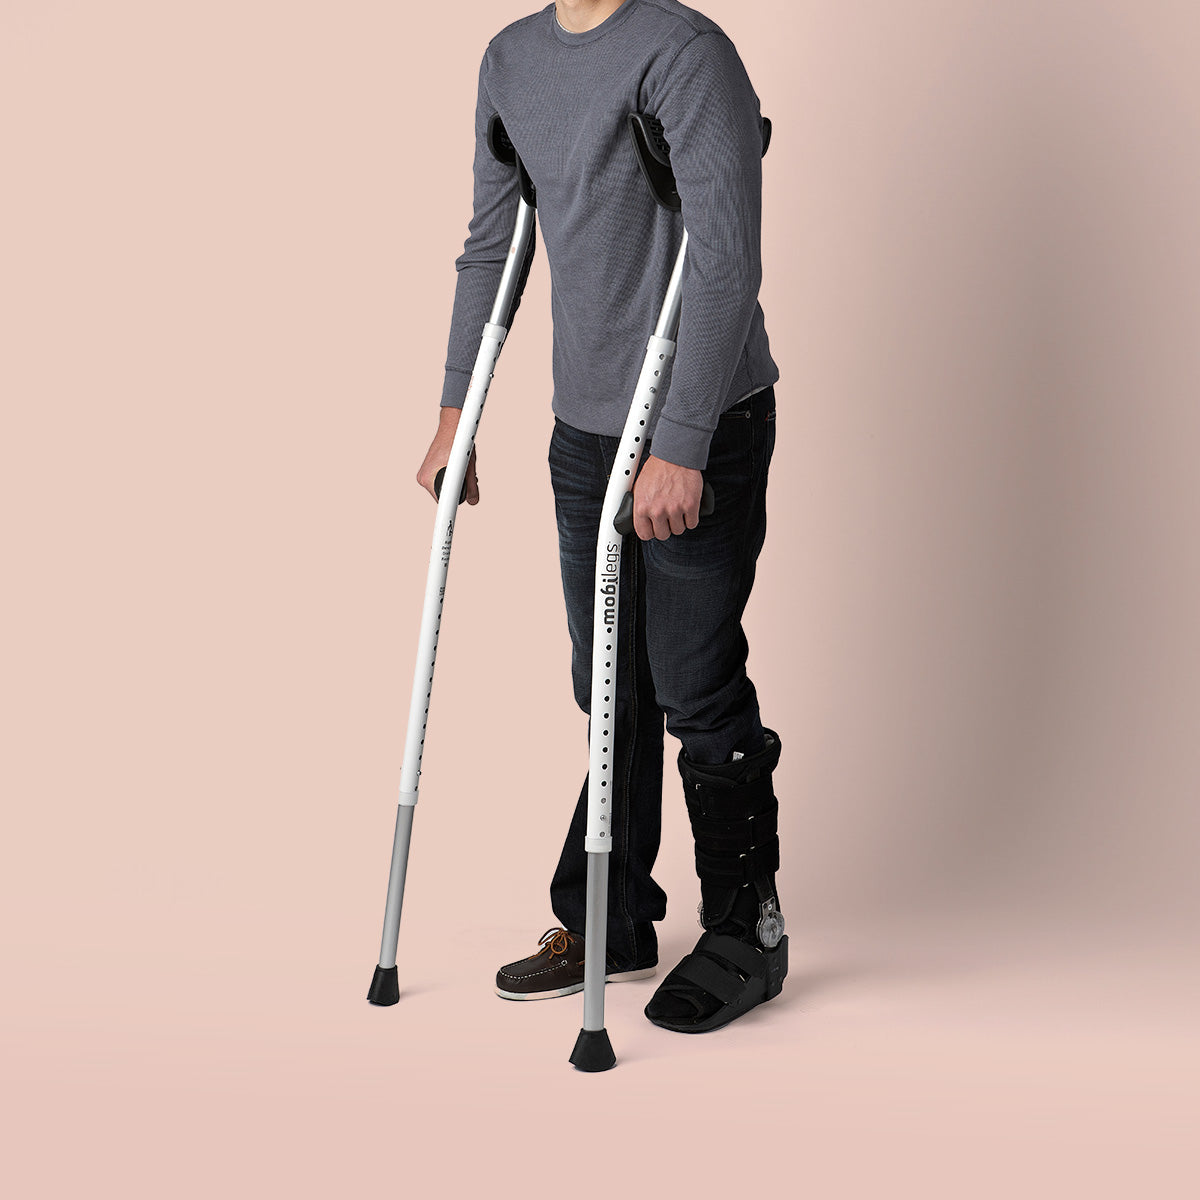 Man wearing leg cast using Mobilegs Ultra crutches.